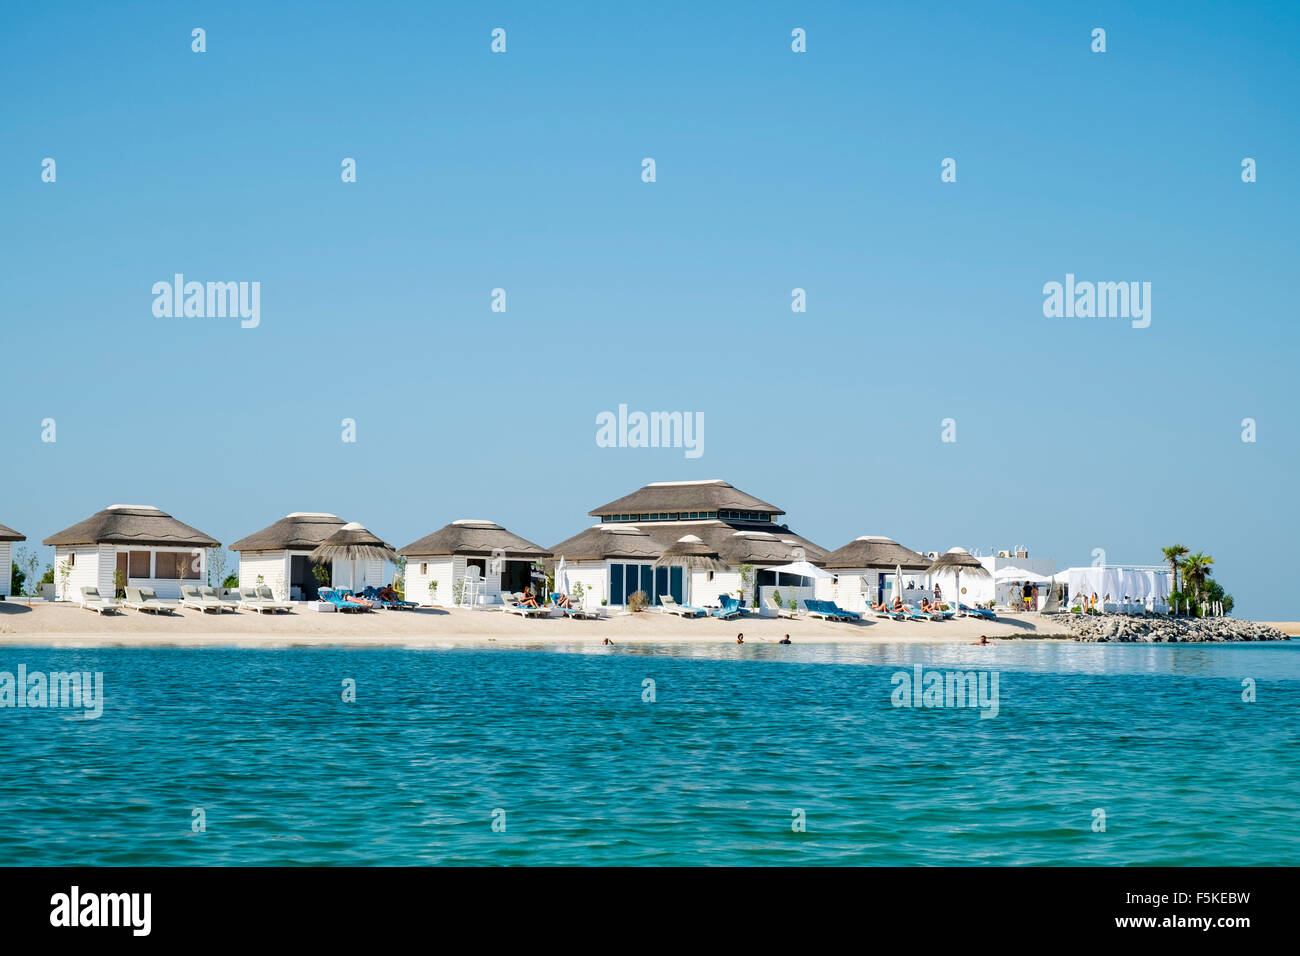 View of The Island Lebanon beach resort on a man made island, part of The World off Dubai coast in  United Arab Emirates Stock Photo